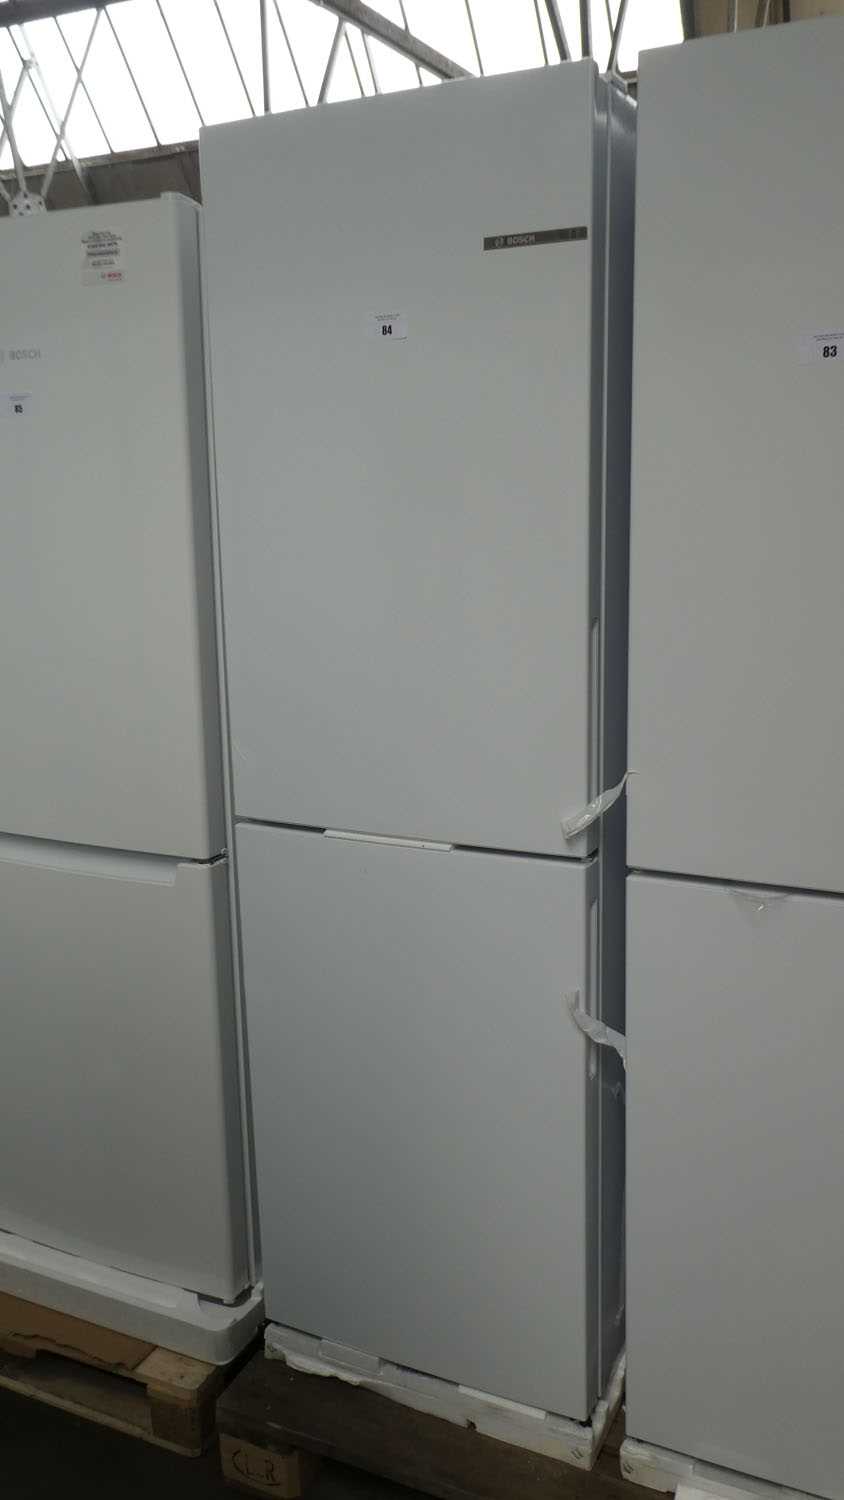 Lot 84 - KGN27NWFAGB Bosch Free-standing fridge-freezer